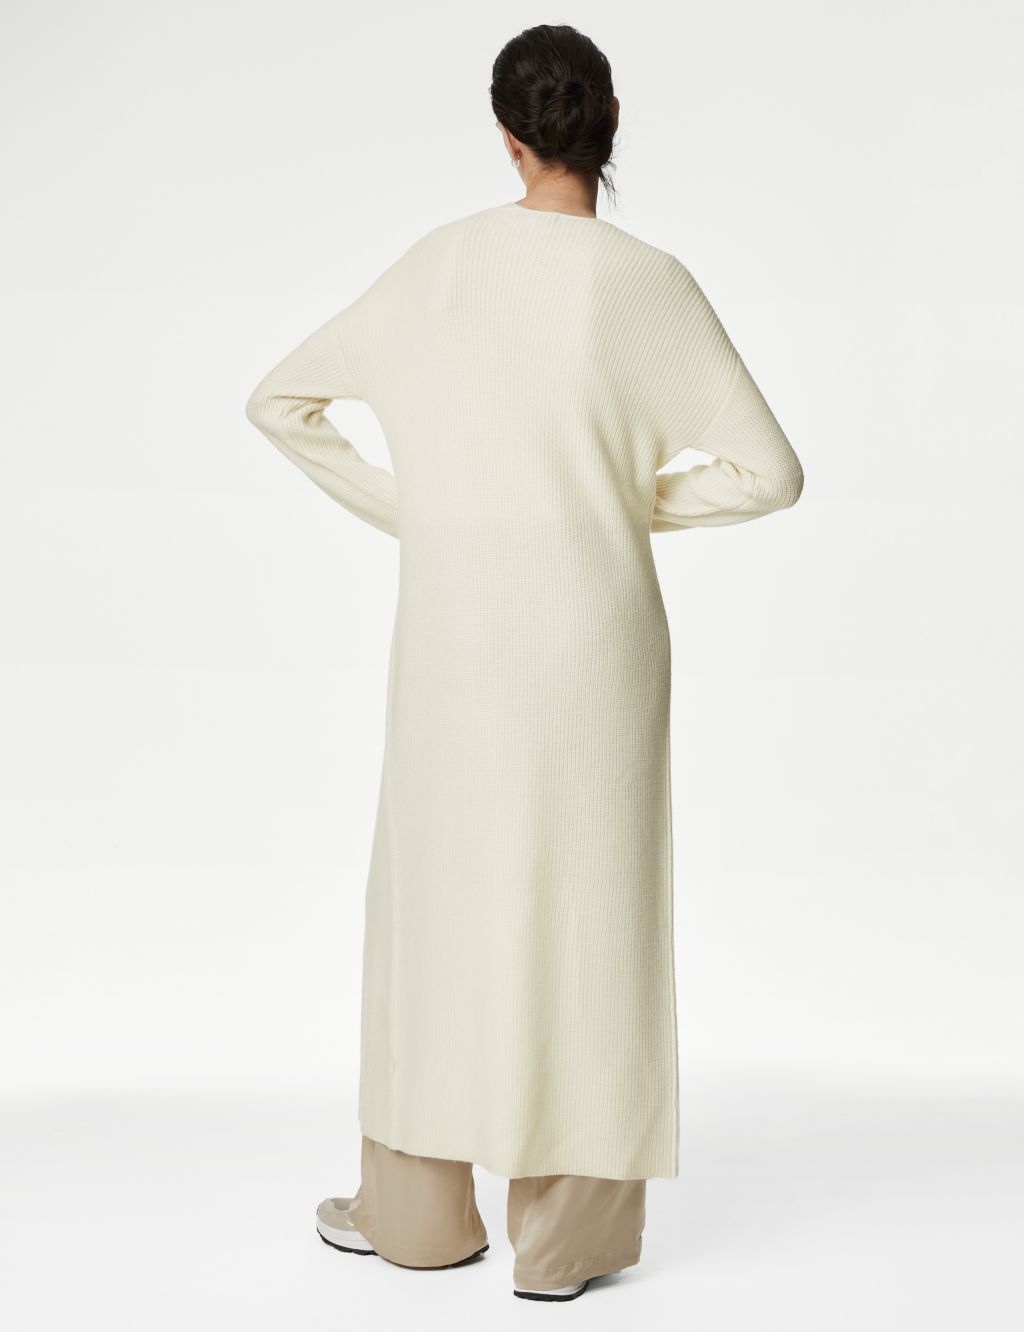 Merino Wool With Cashmere Longline Cardigan image 5